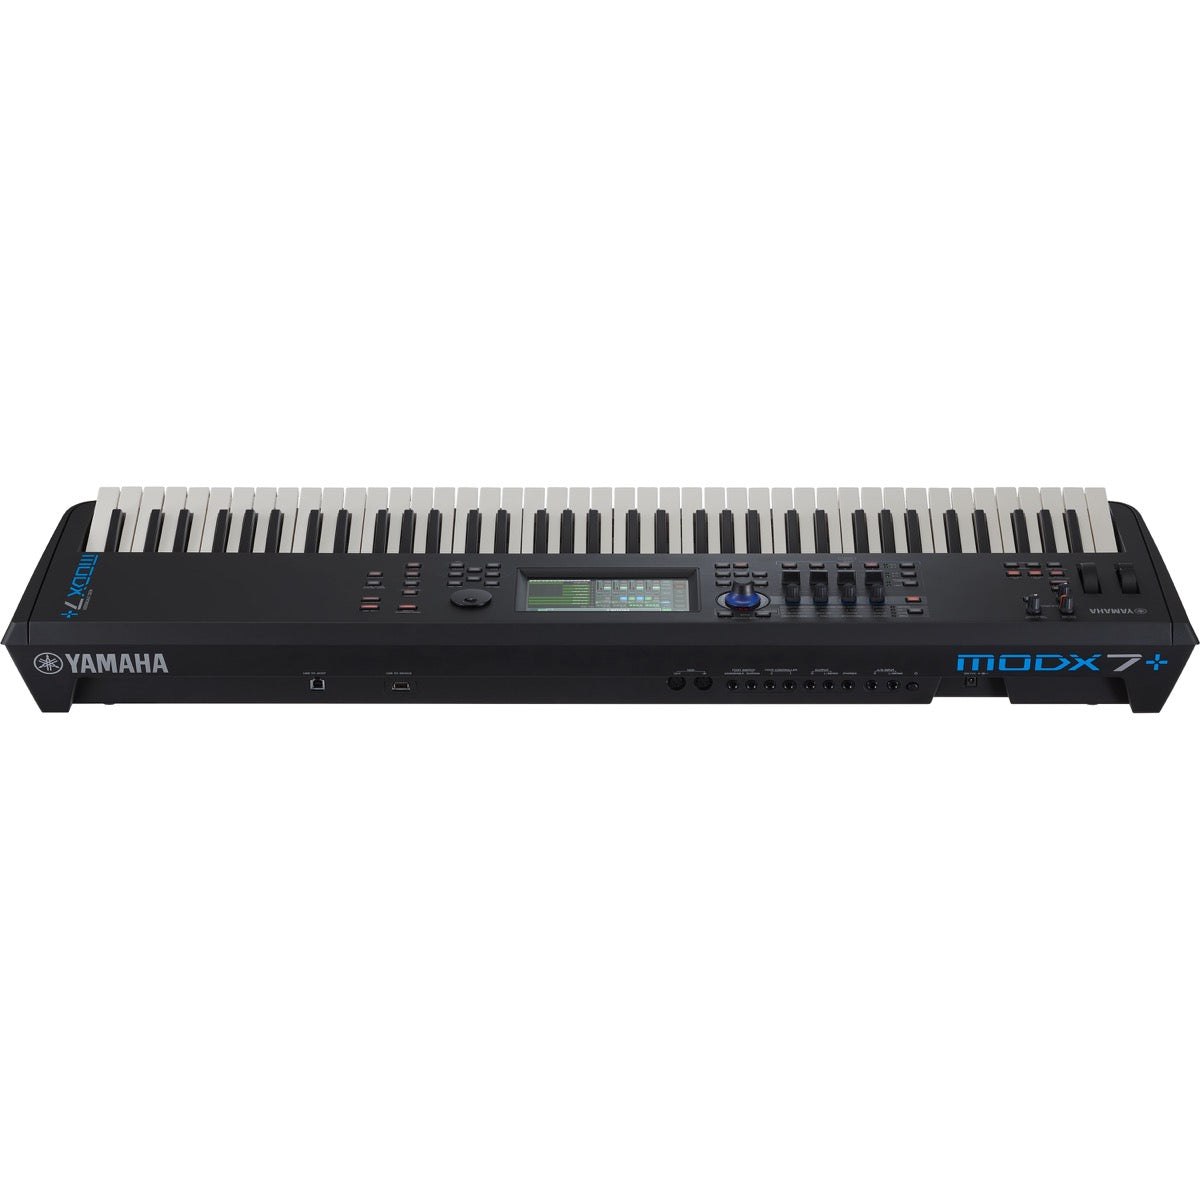 Yamaha MODX7+ 76-Key Synthesizer Keyboard View 6